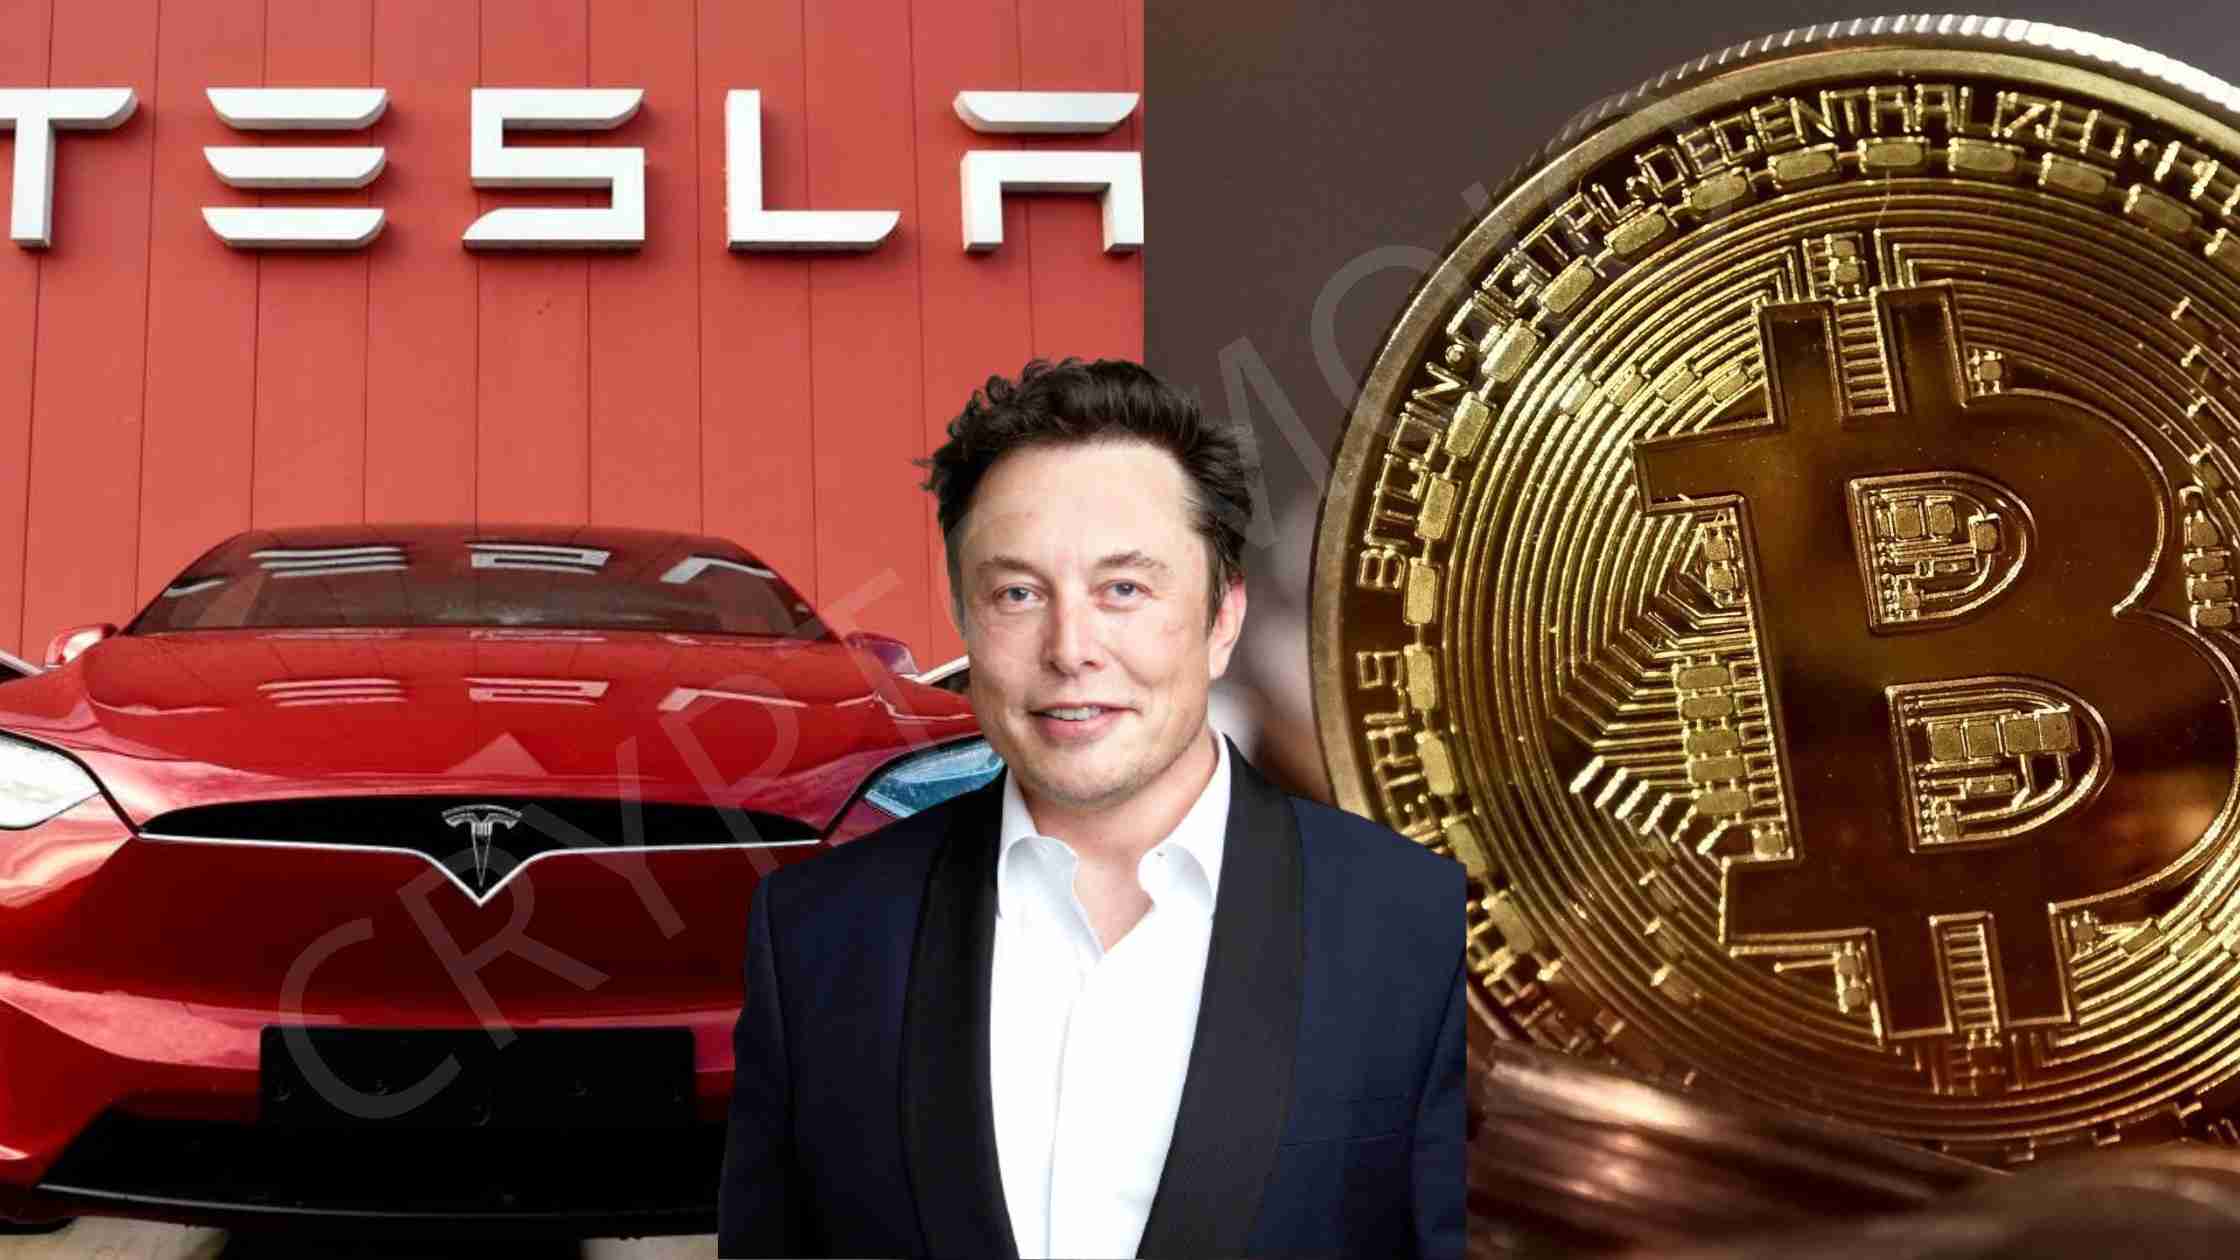 Did Elon Musk Make A Bitcoin Withdrawal Before Tesla Could Go Bankrupt?